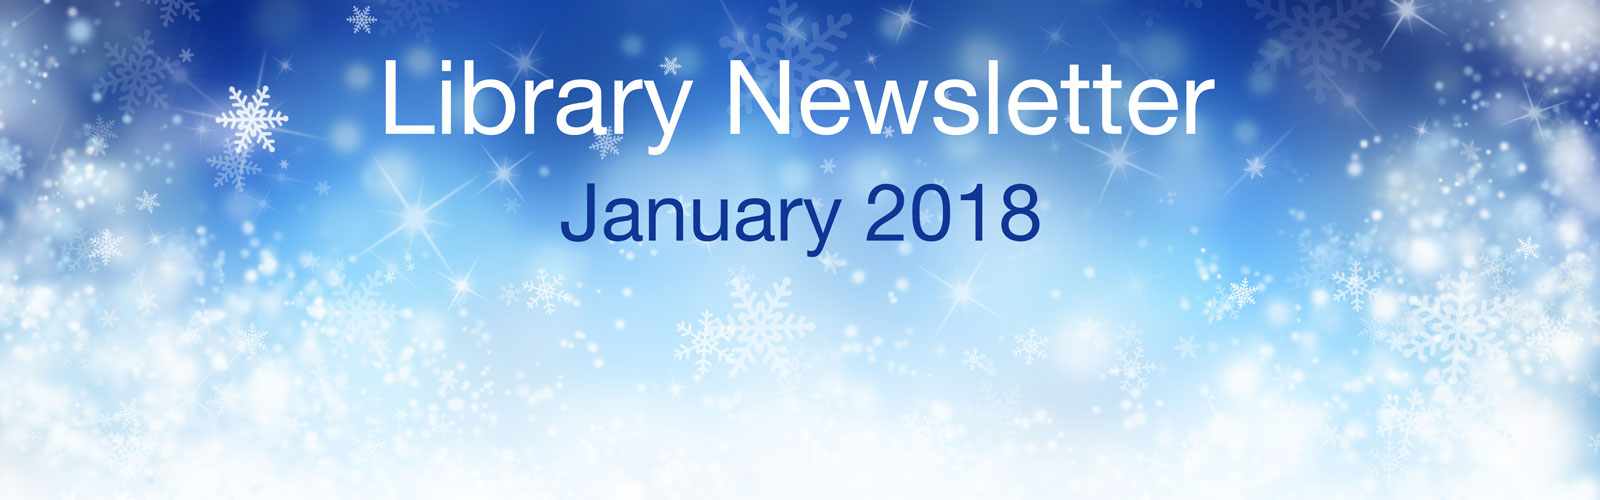 Library Newsletter - January 2018